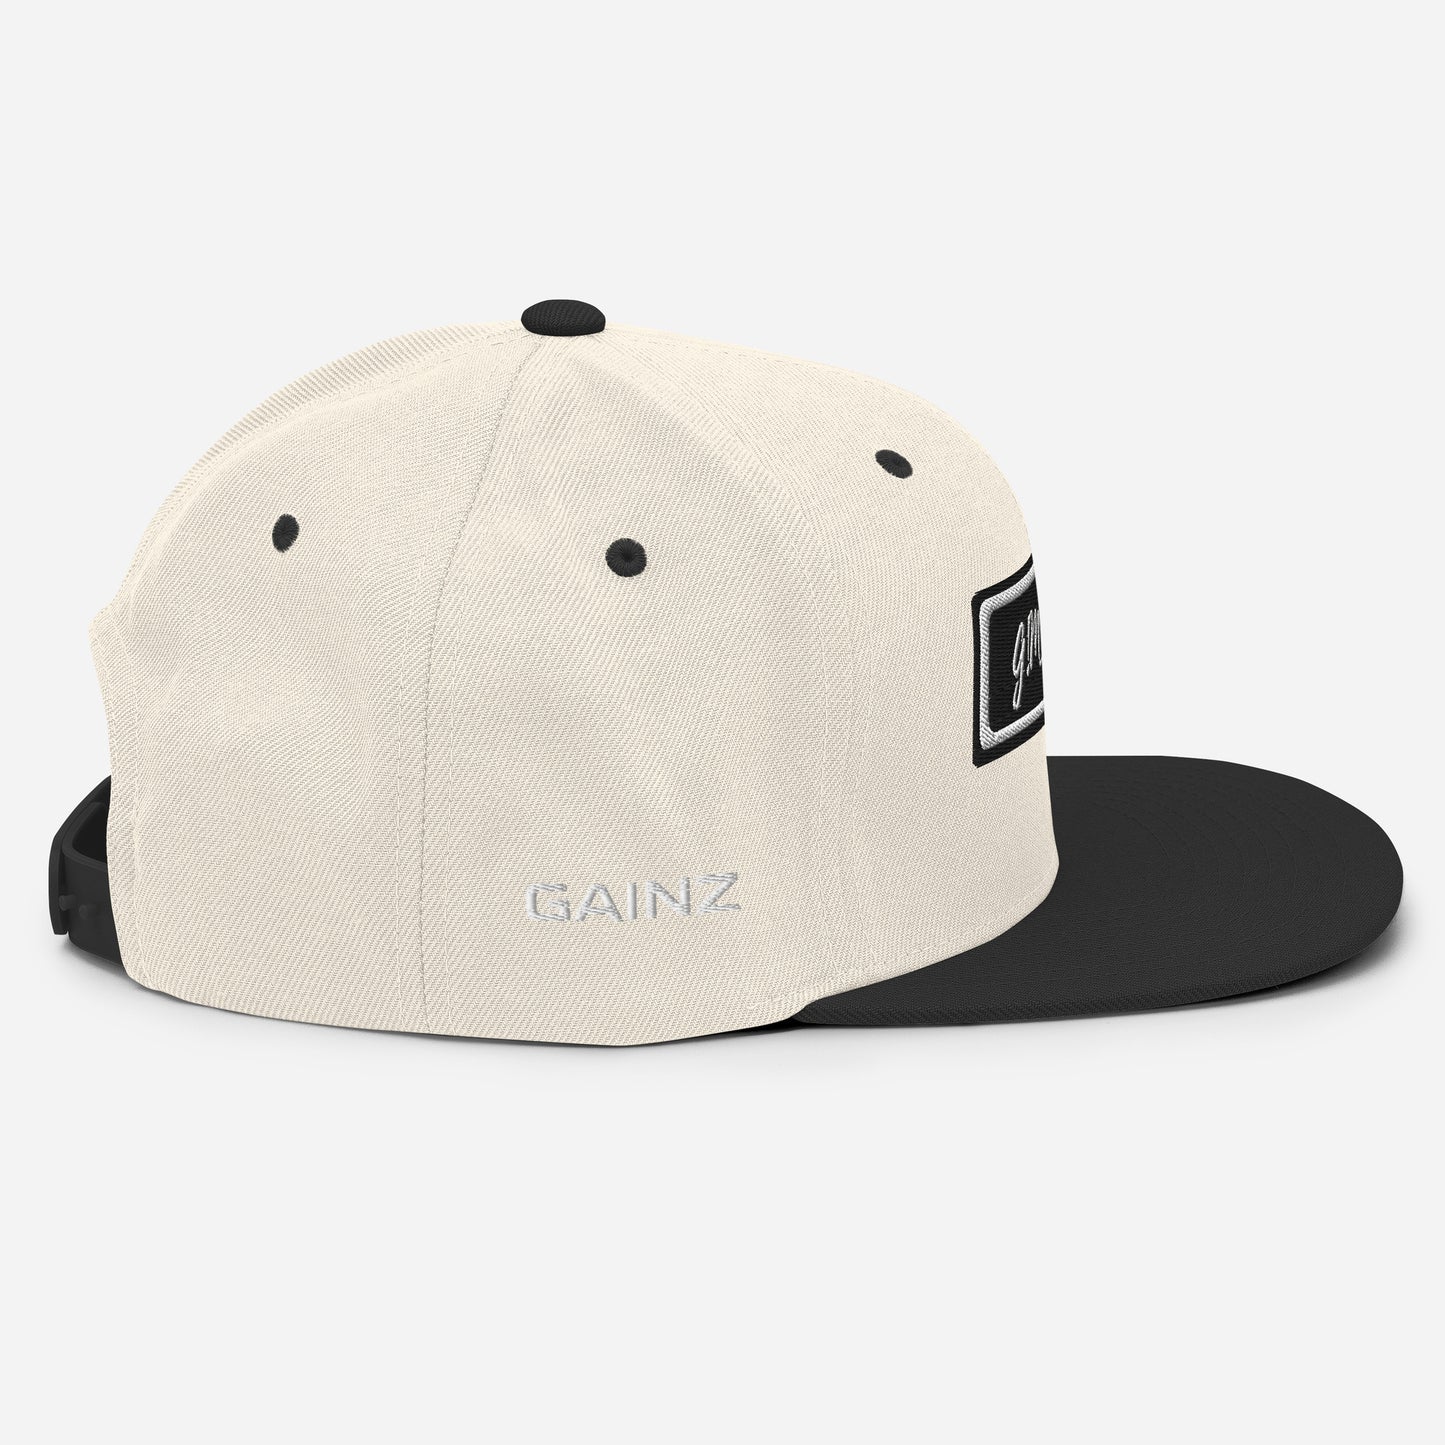 Gym Cap GAINZ - Snapback